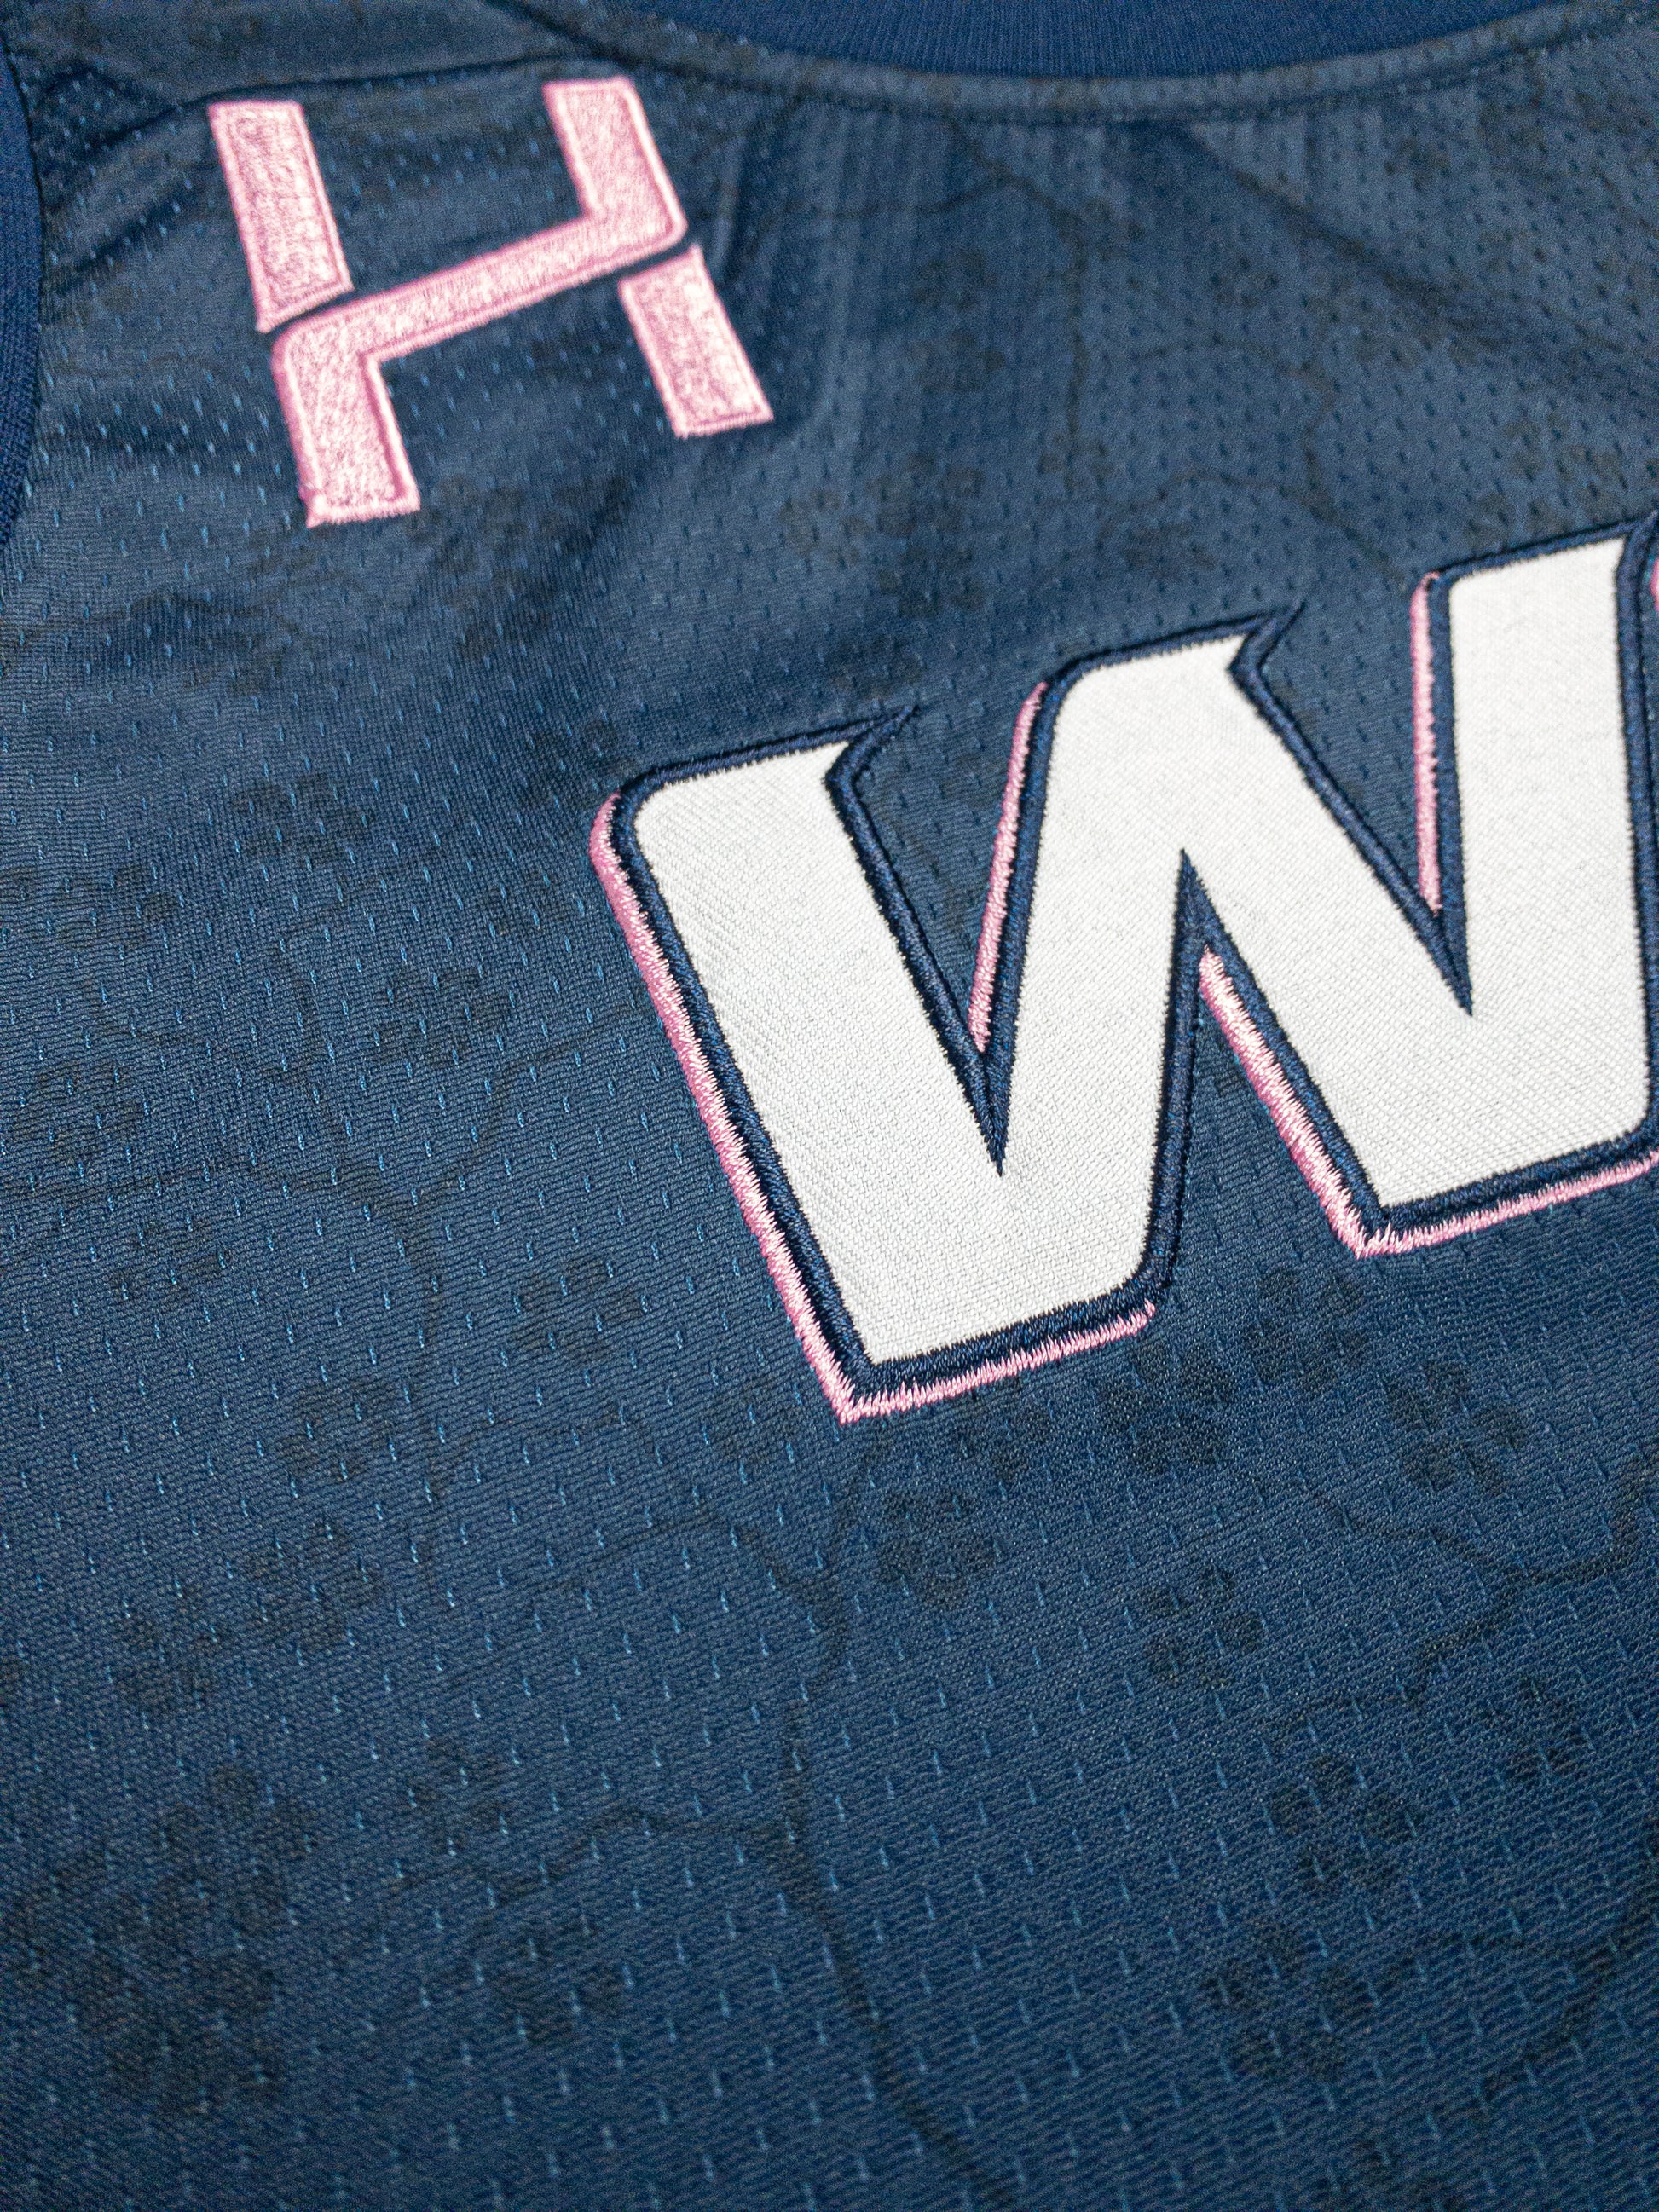 Washington Wizards] Photos: Bloom City Edition Uniform Details :  r/washingtonwizards